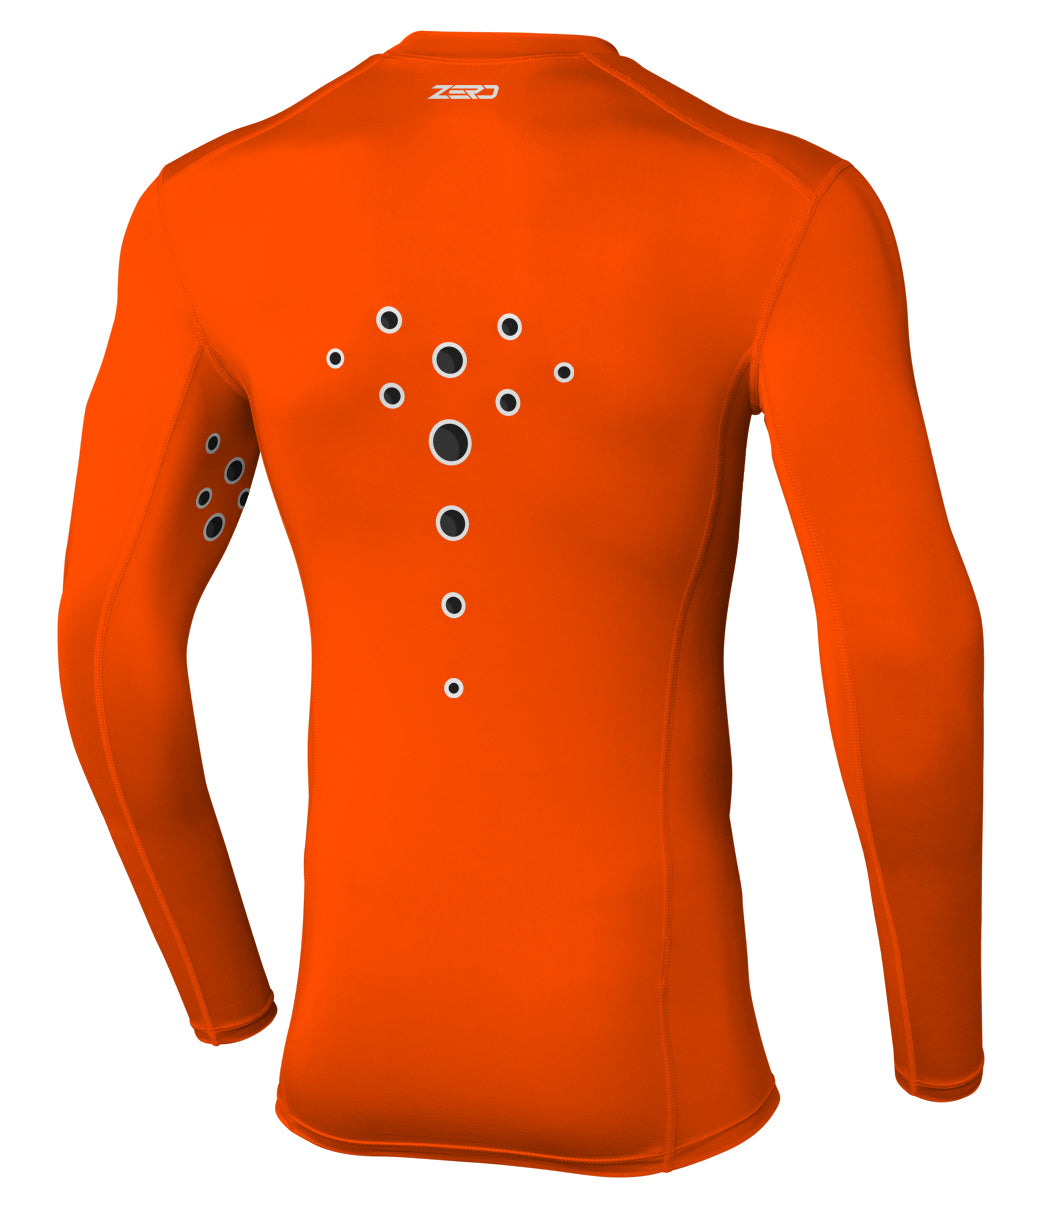 Hellfire Orange Custom Dye Sublimated Basketball Jersey. - AAANTEX